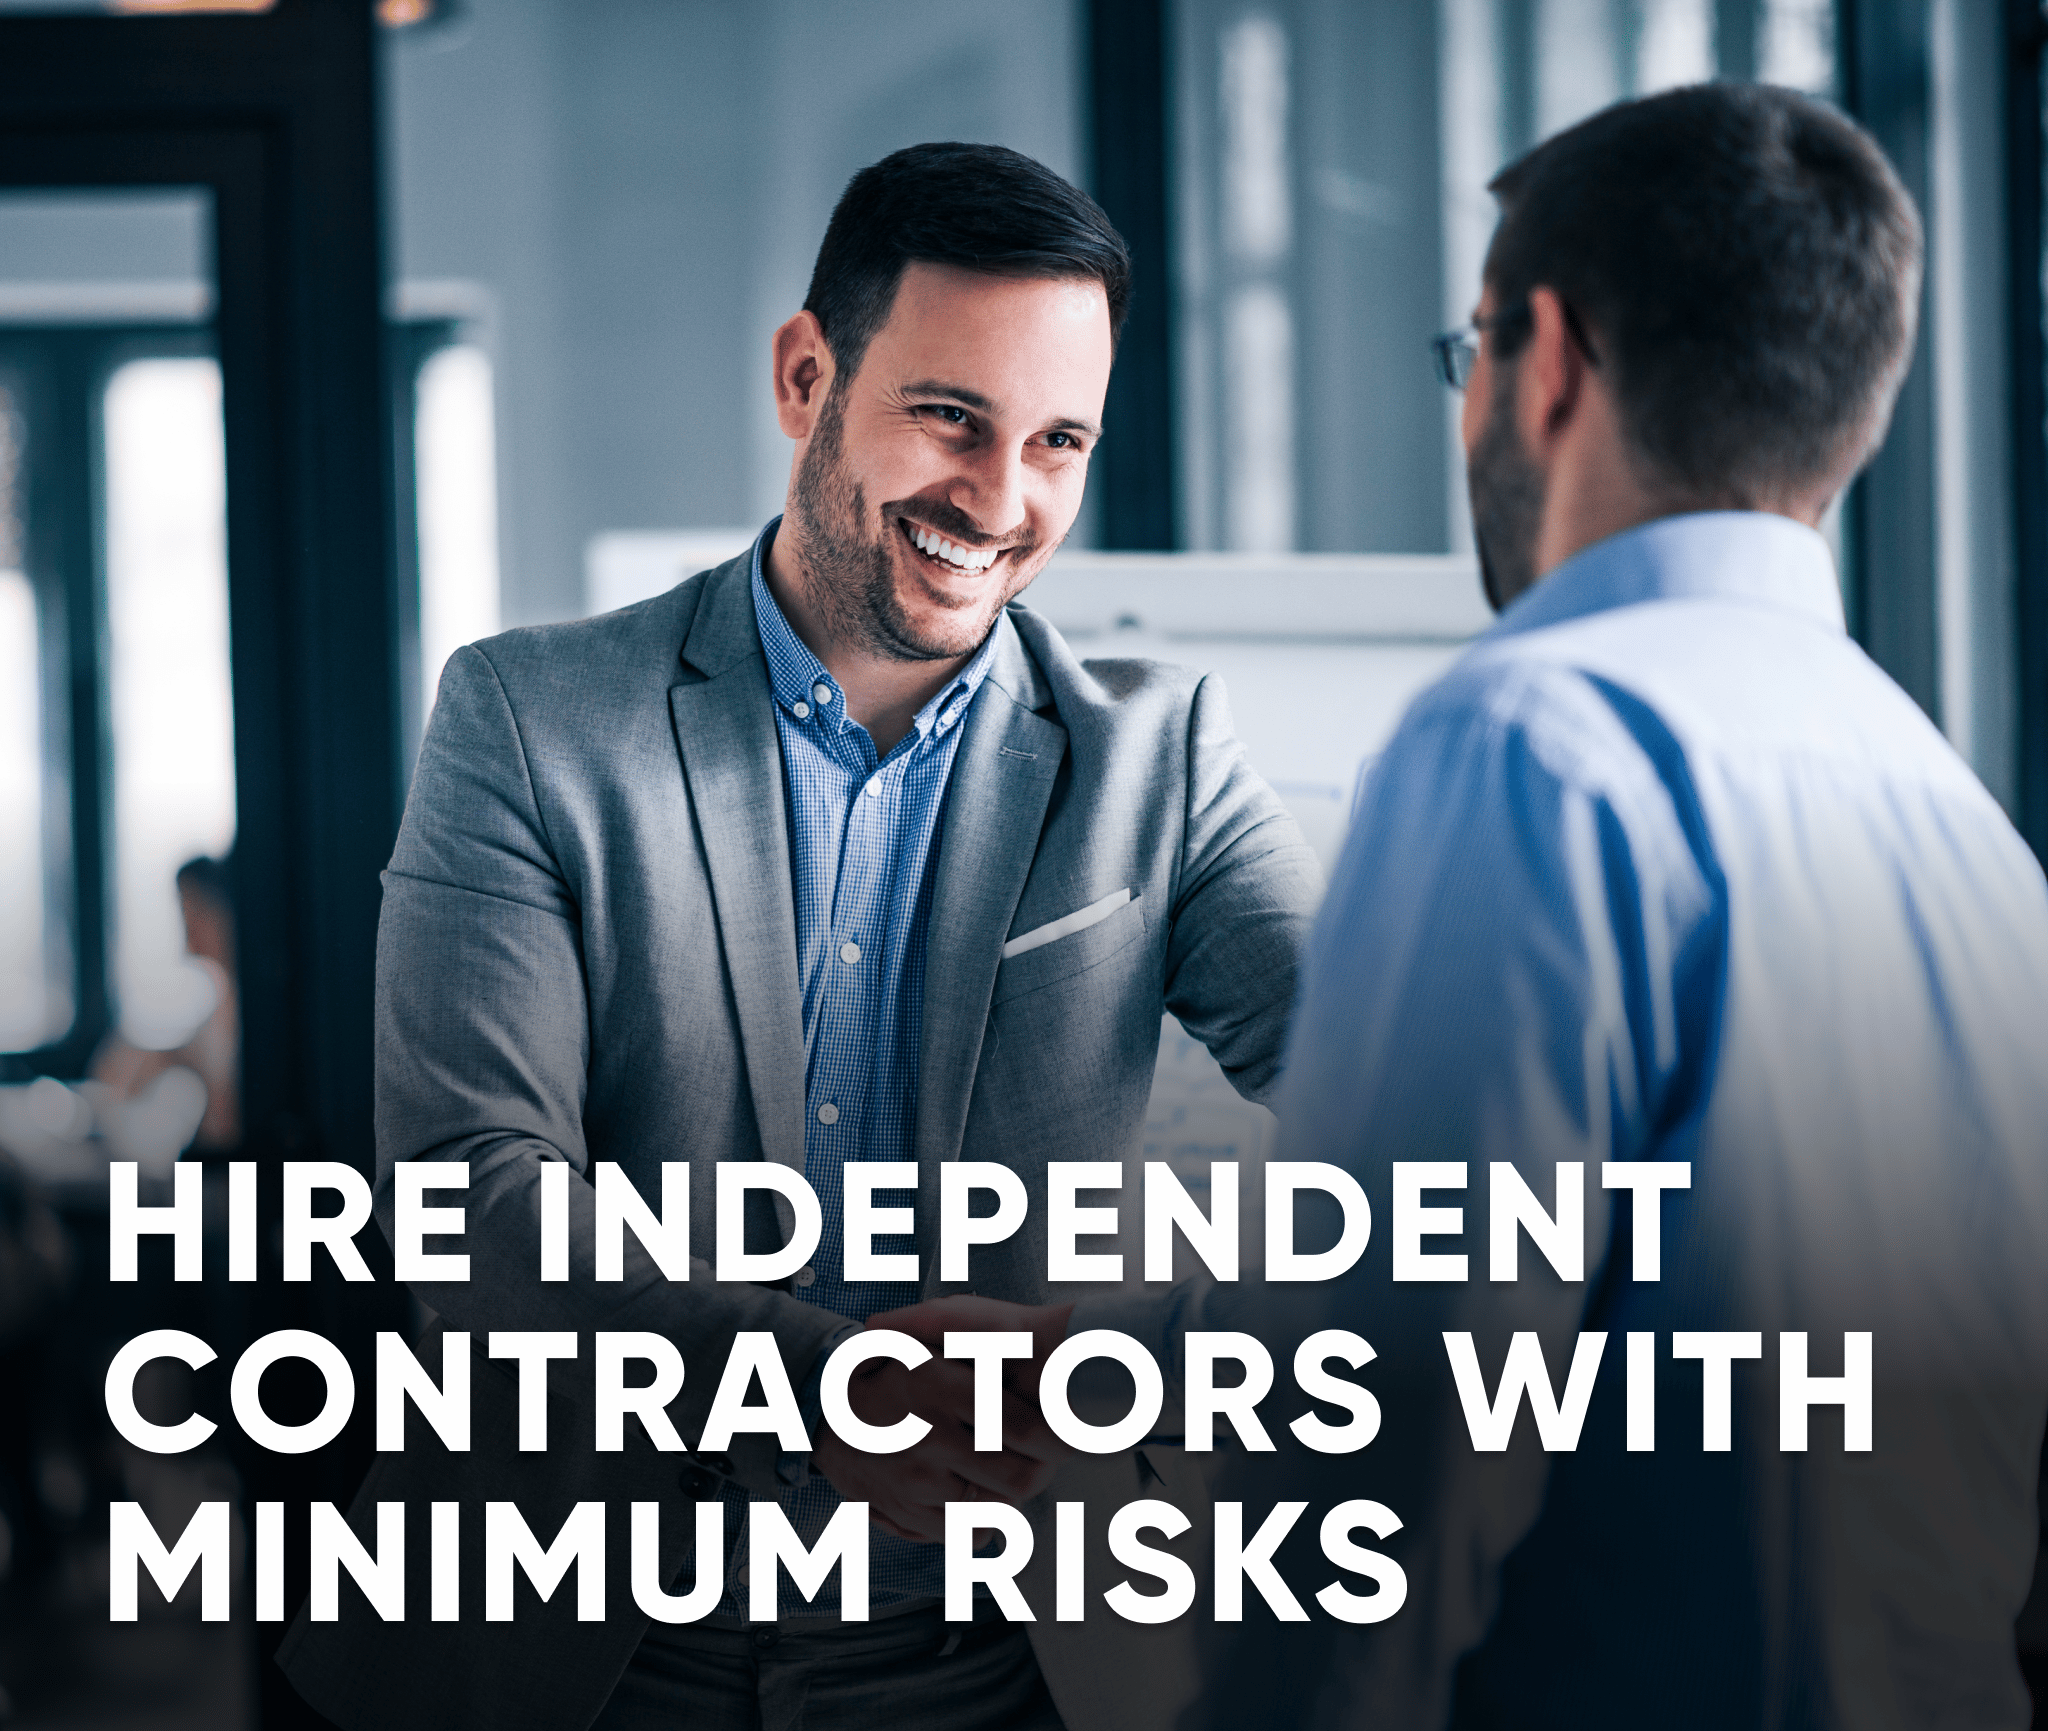 Hire independent contractors with minimum risks